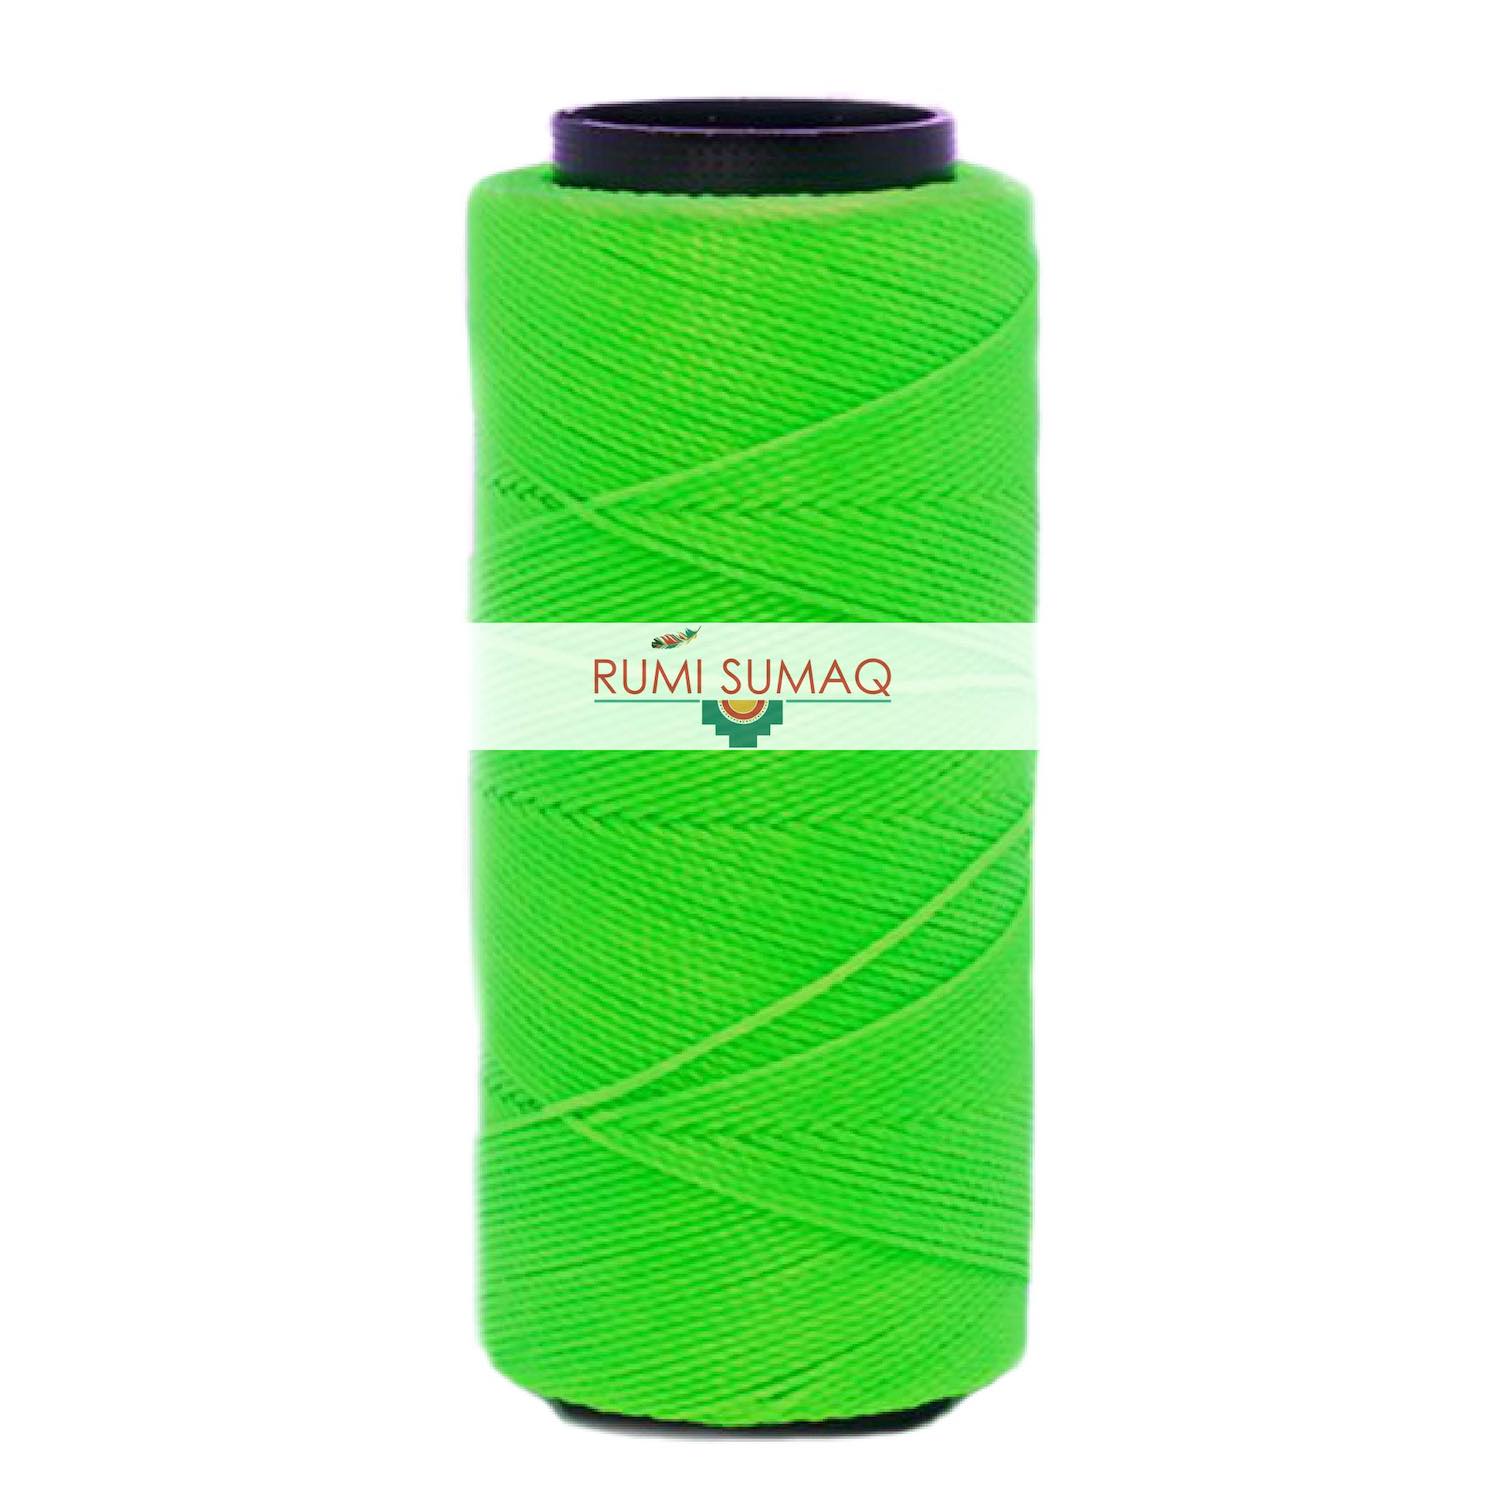 Settanyl 08-329 Glow Stick Green Waxed Polyester Cord Neon Green Thread | RUMI SUMAQ Brazilian Waxed Cords